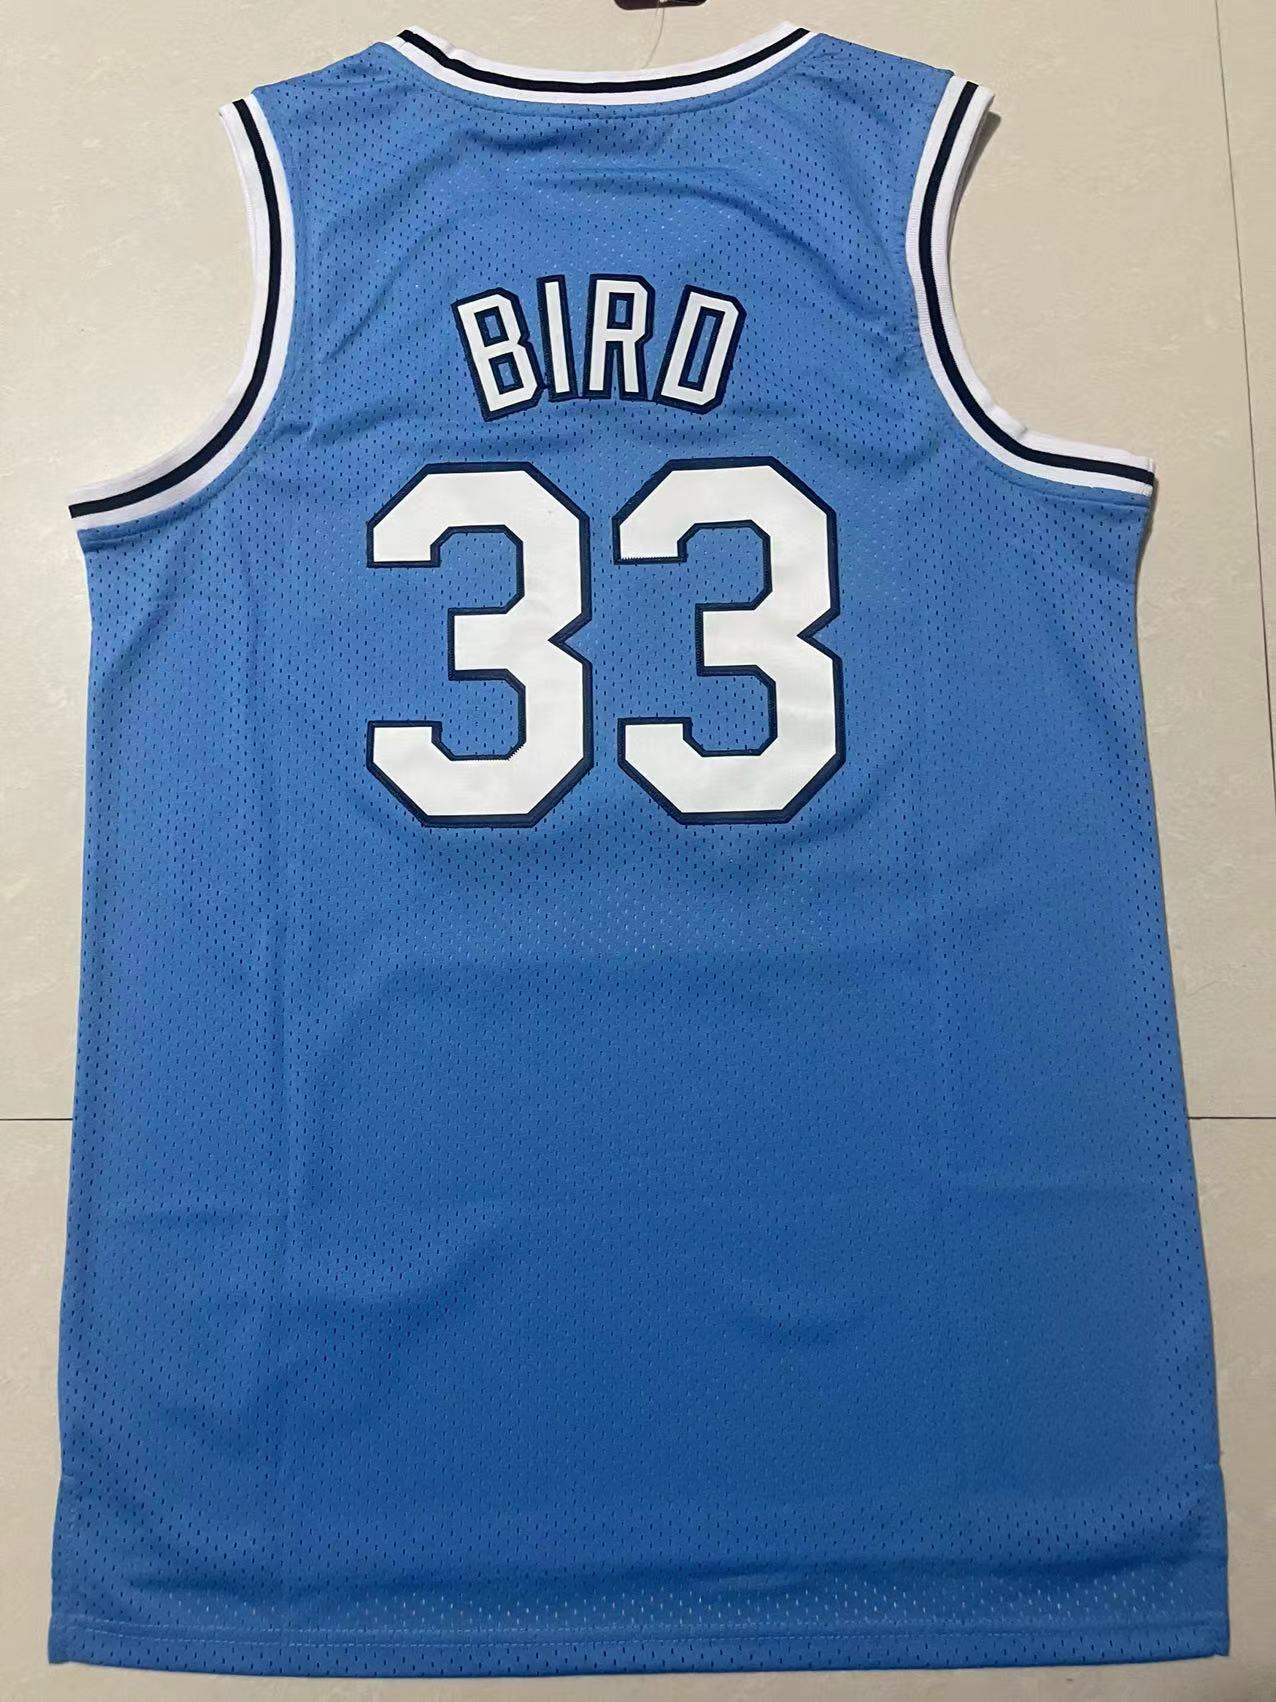 Boston Celtics Larry Bird NO.33 Basketball Jersey